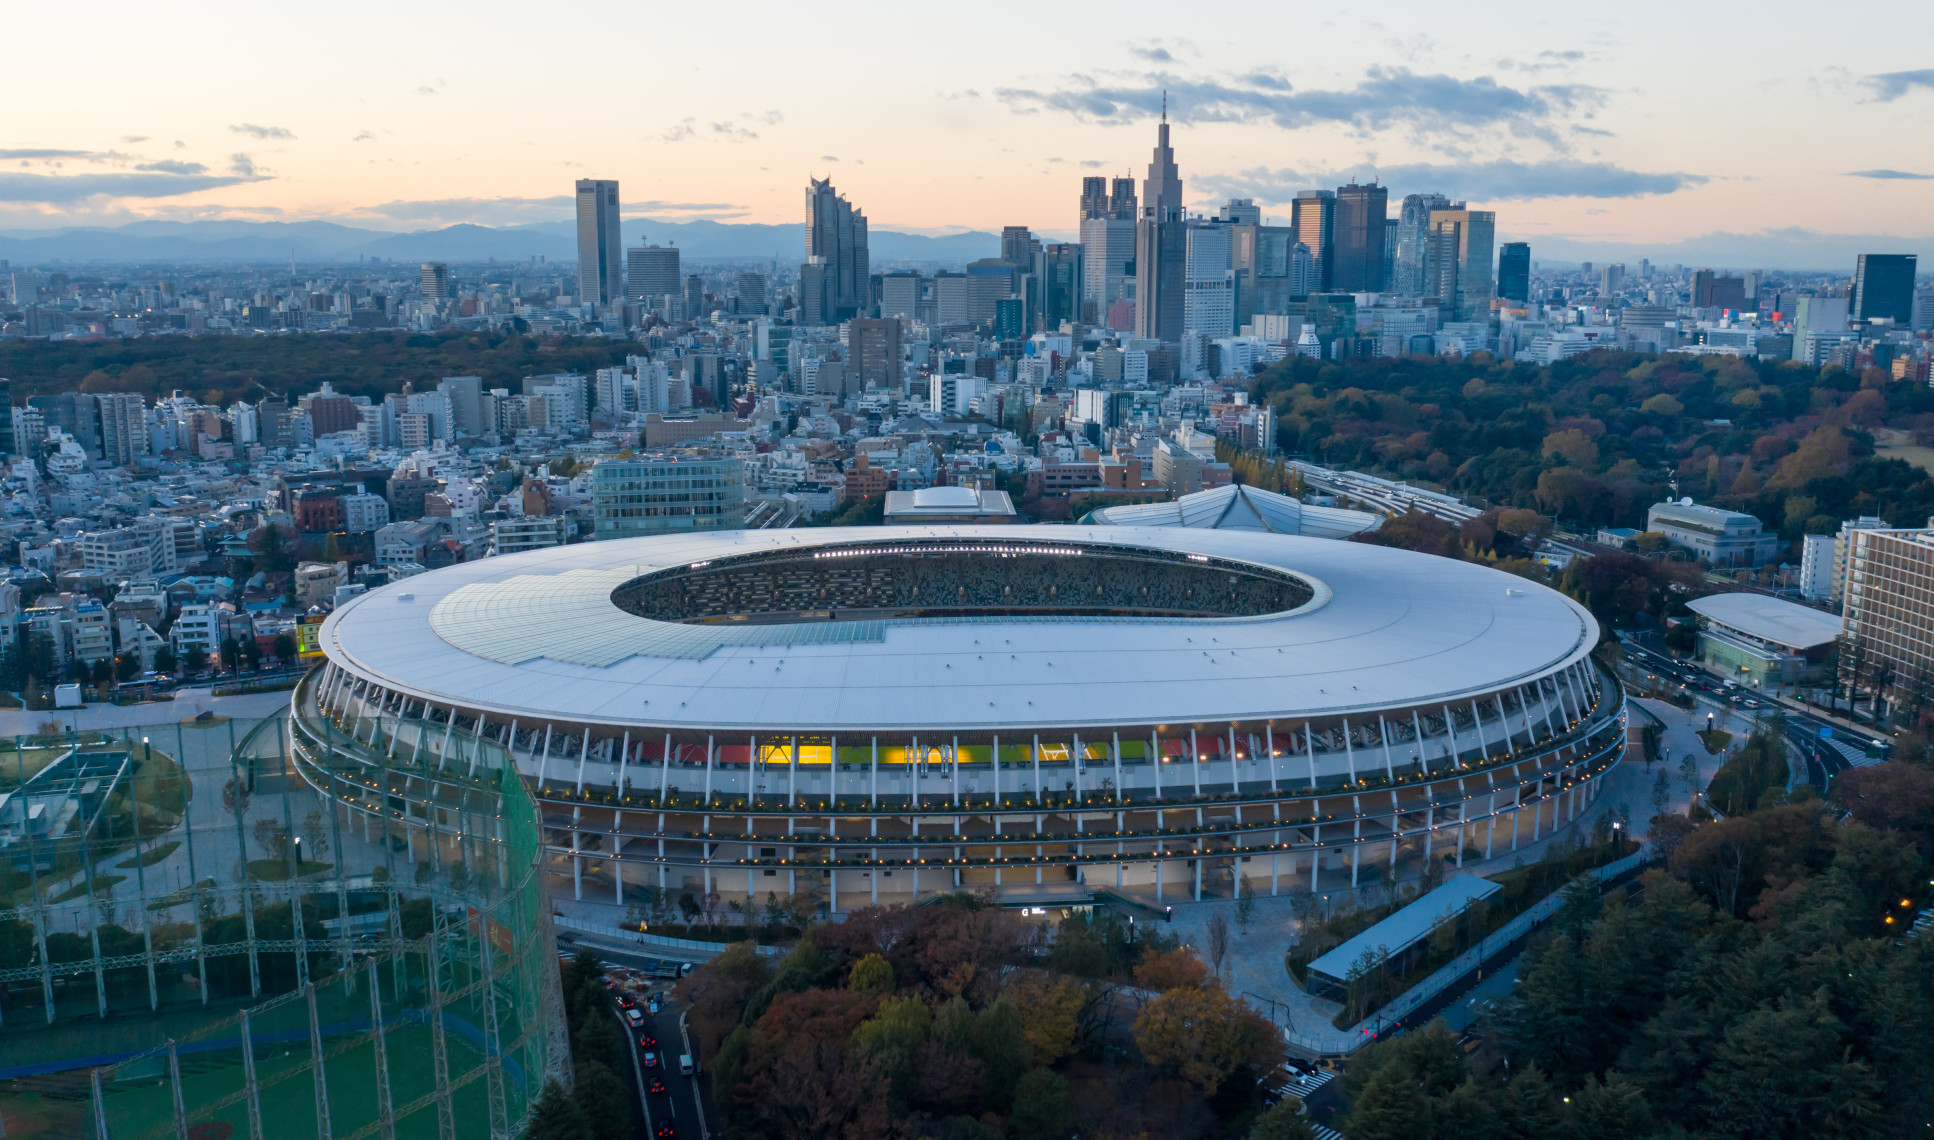 The Japan National Stadium in Tokyo